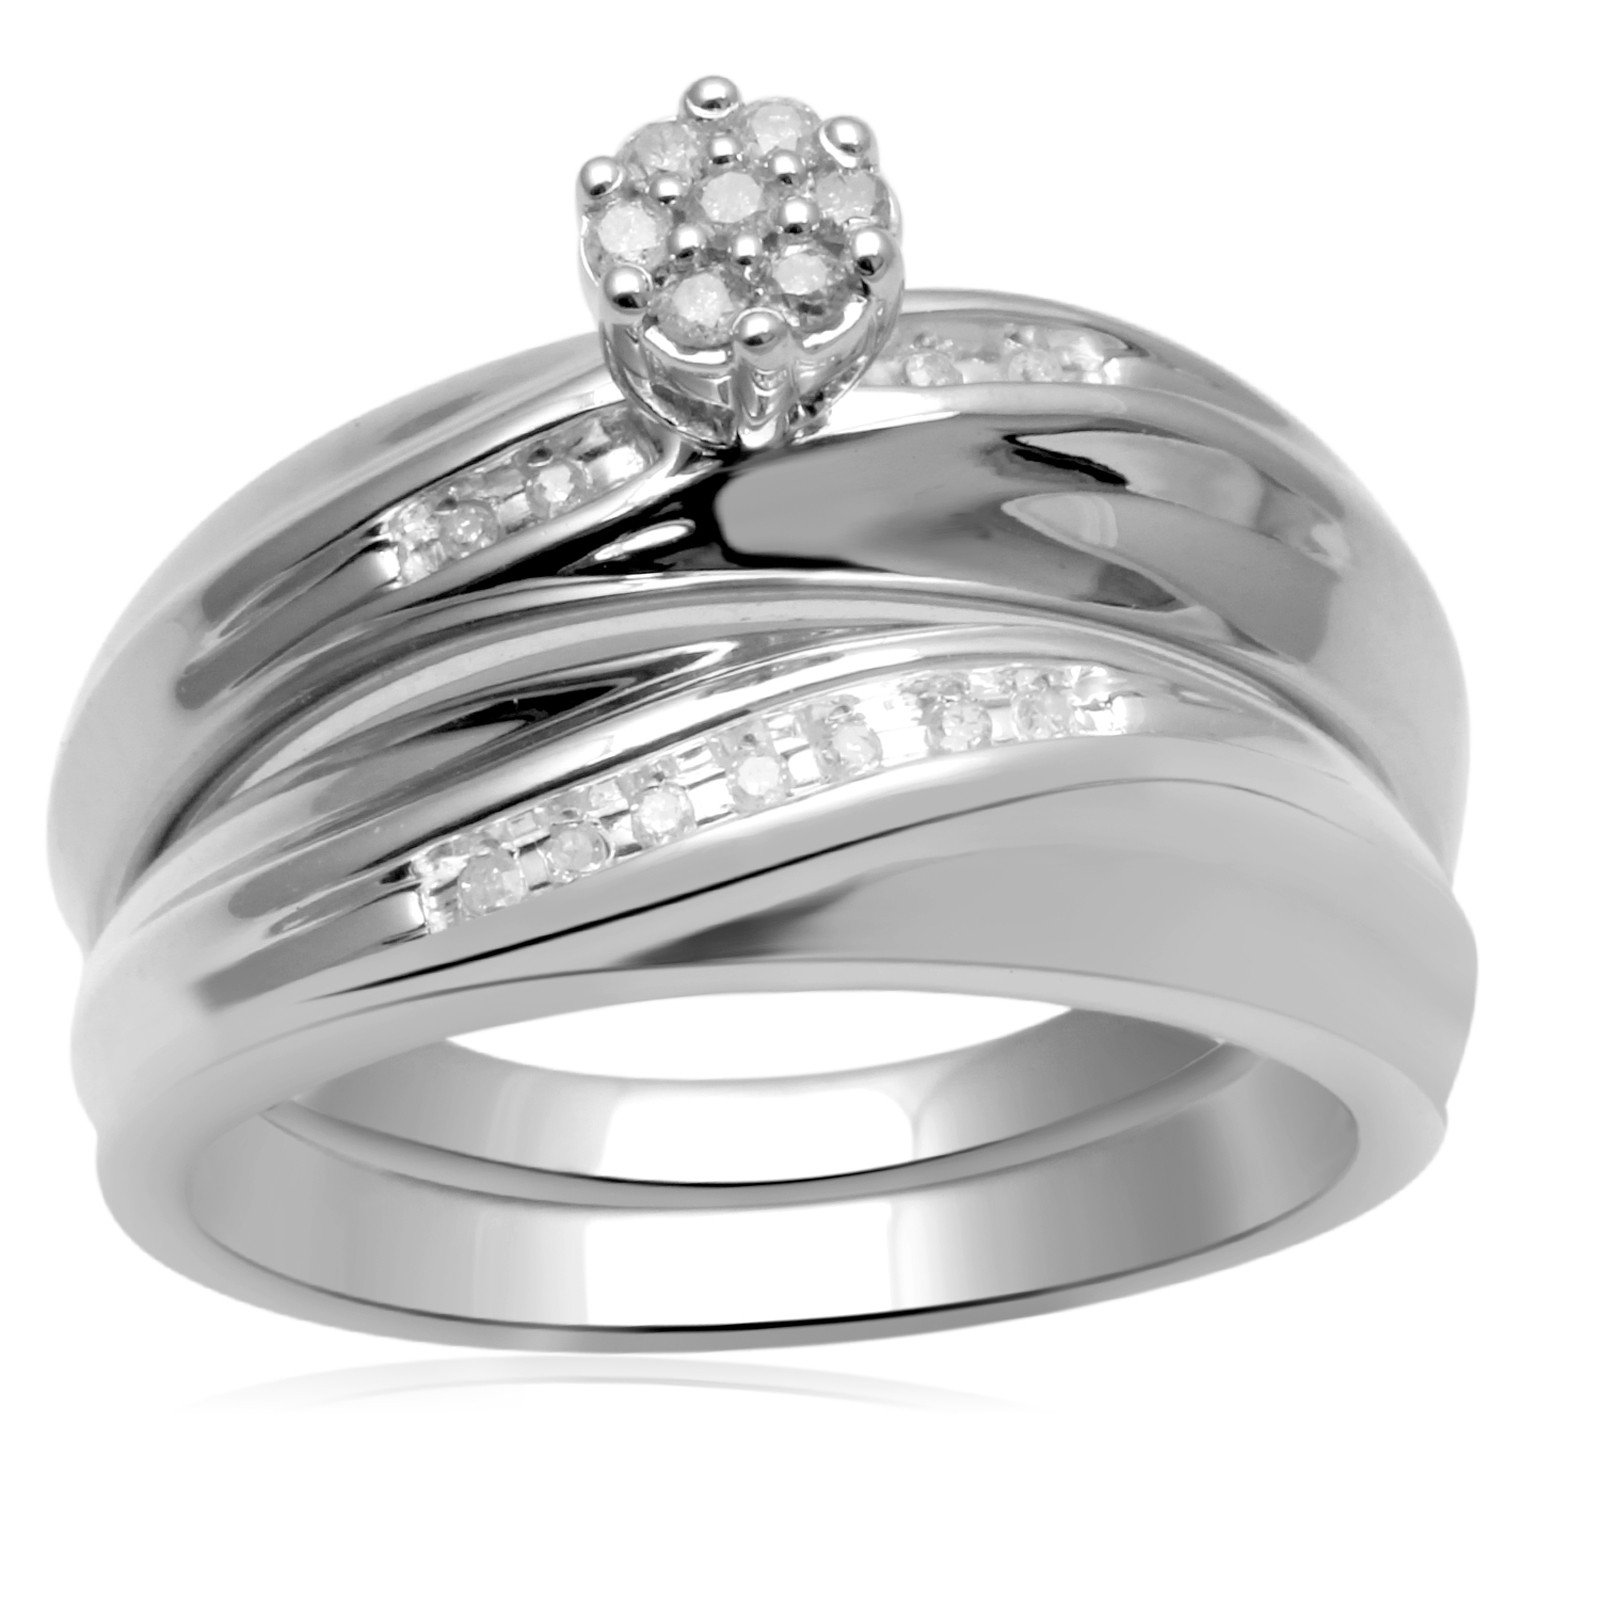 Kmart Wedding Ring Sets
 Eternal Treasures 1 7ct Sterling Silver Women s Diamond